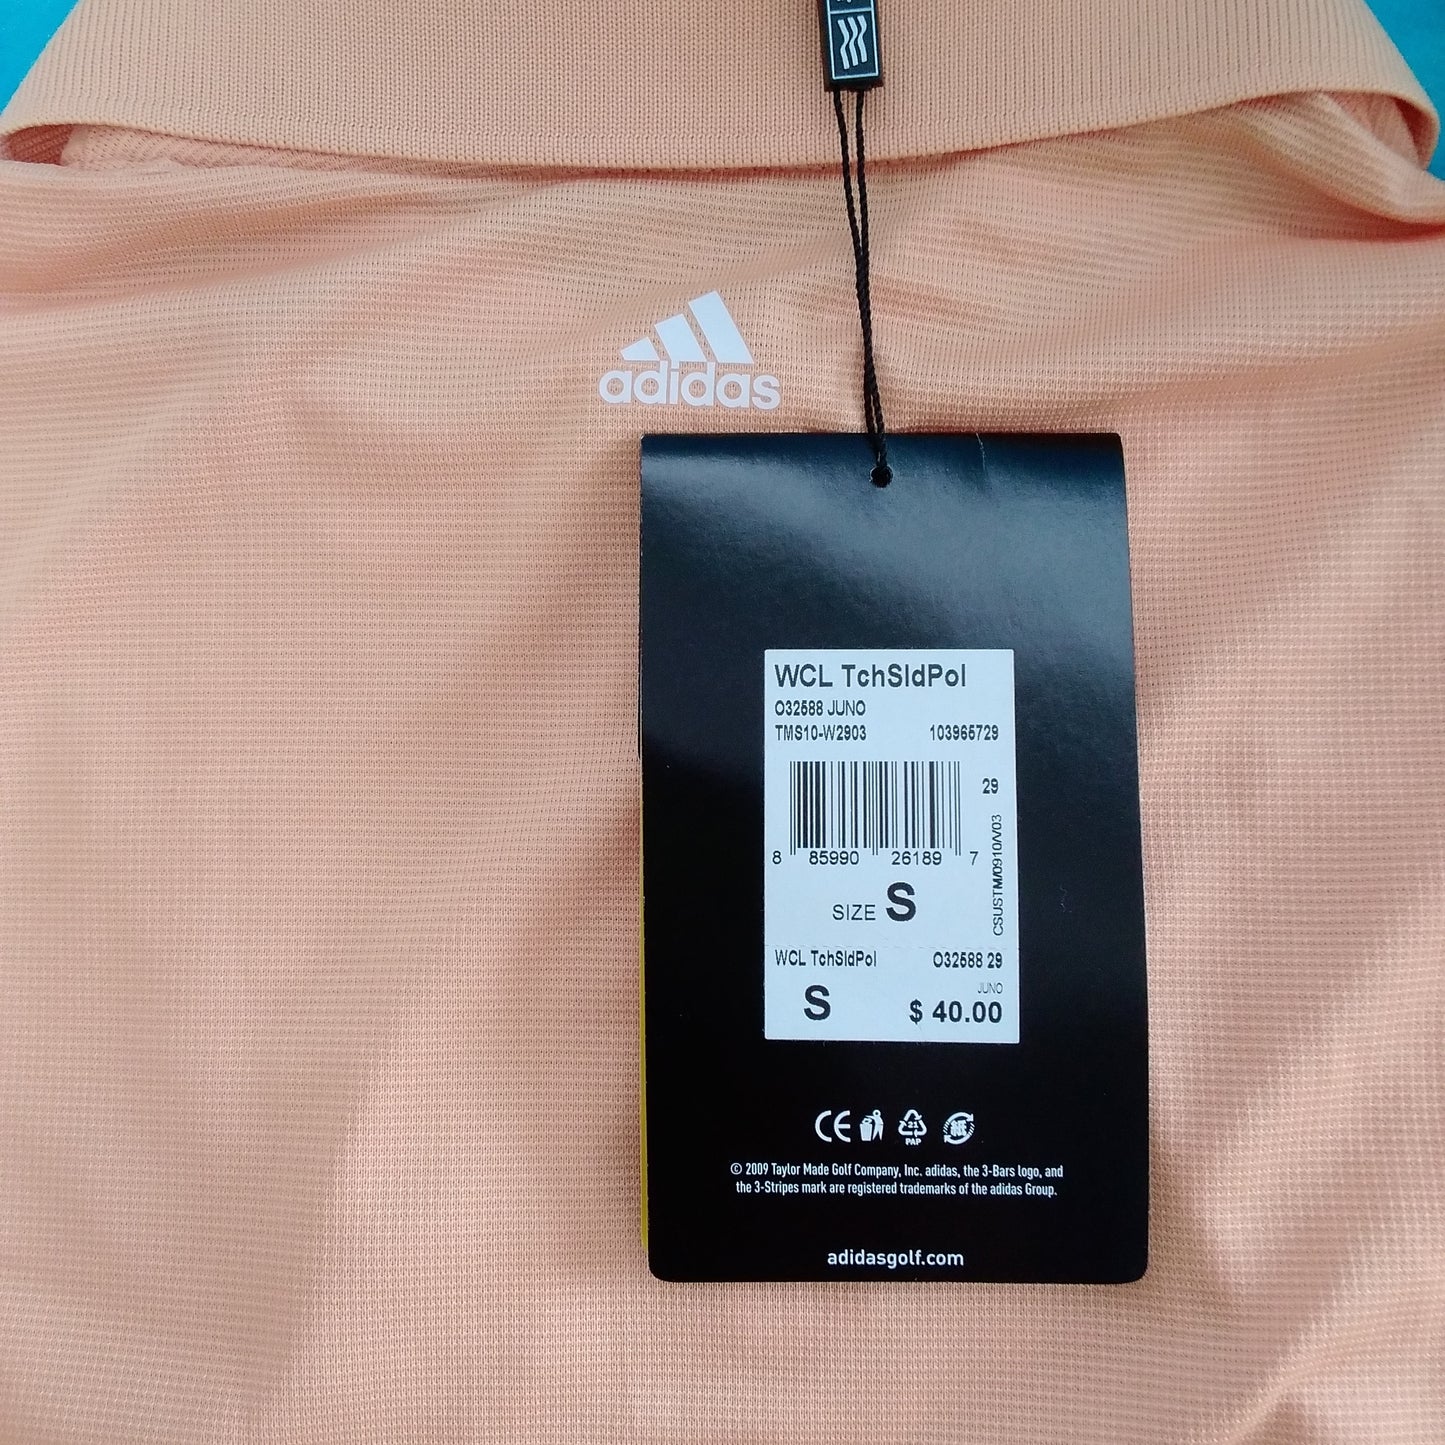 NWT - Adidas Golf peach Climalite Textured Solid Polo Shirt - S